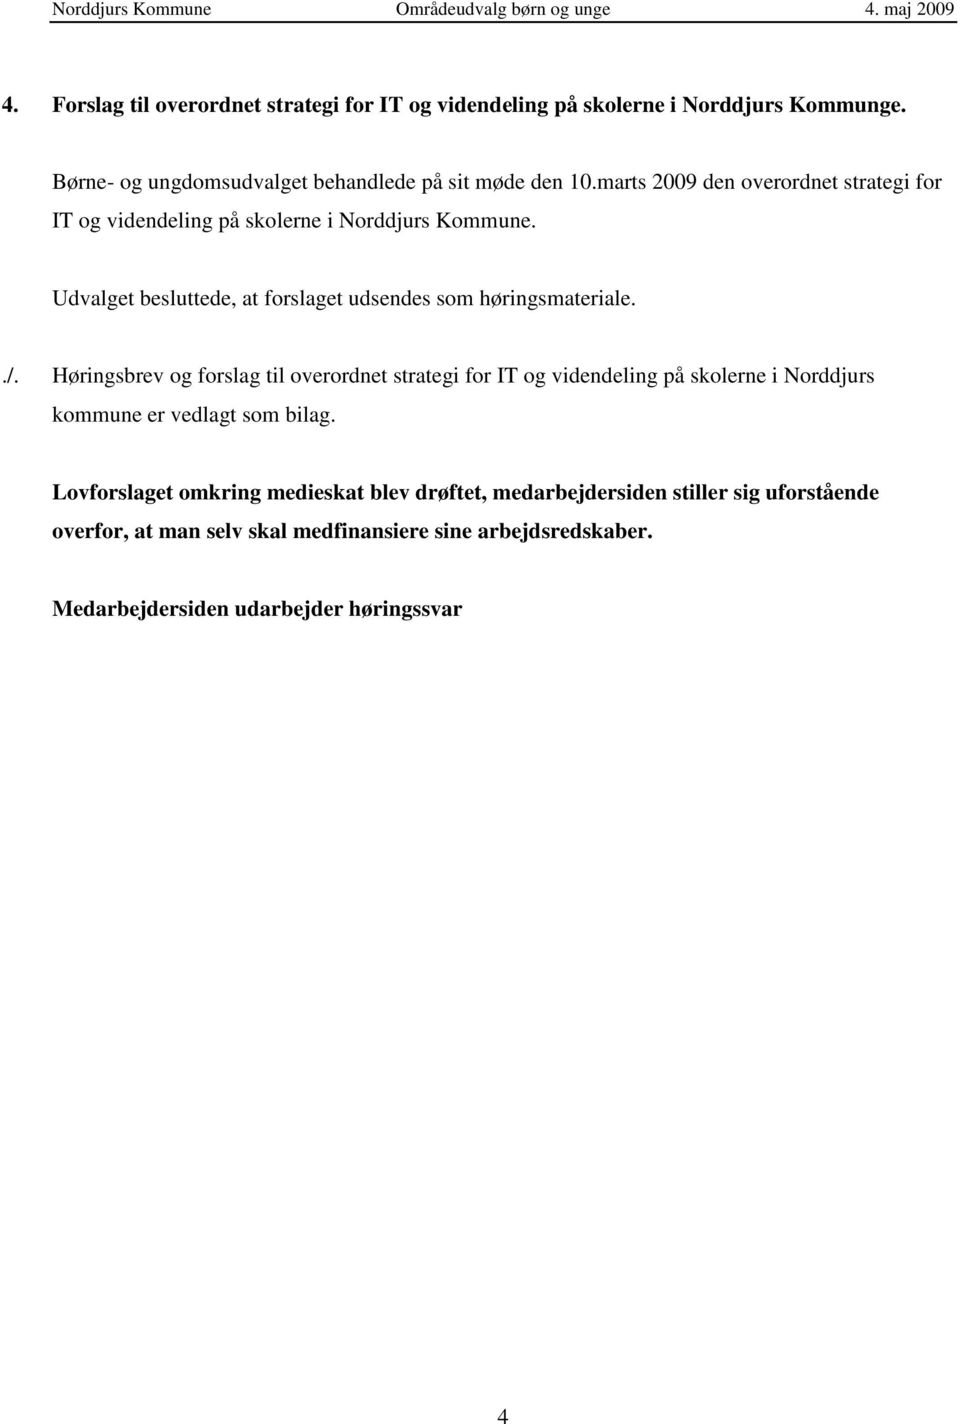 ./. Høringsbrev og forslag til overordnet strategi for IT og videndeling på skolerne i Norddjurs kommune er vedlagt som bilag.